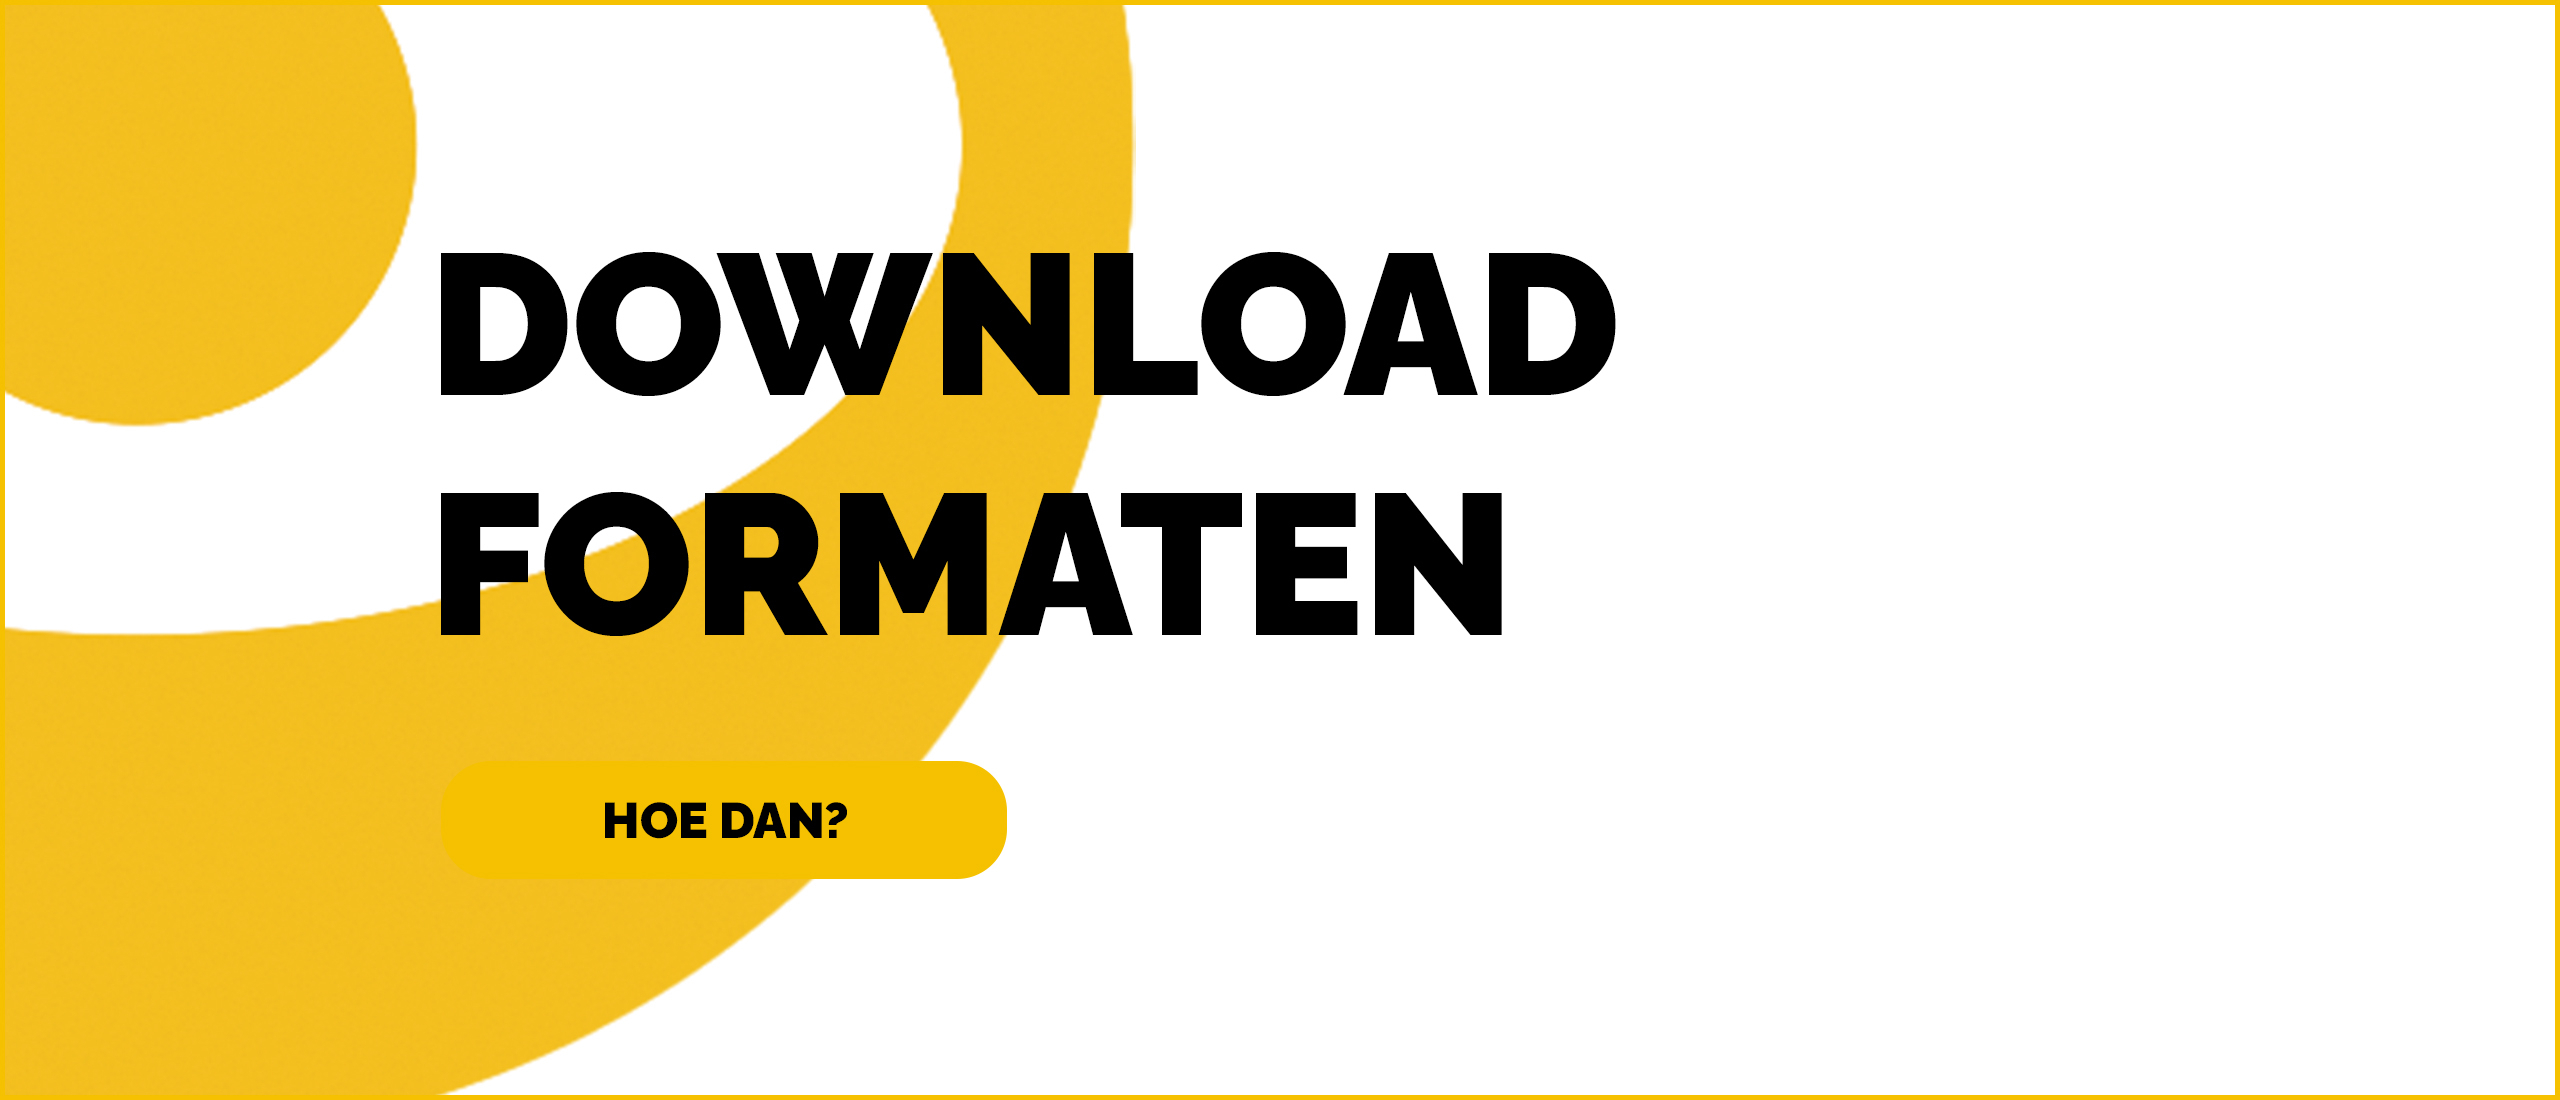 Standaard download formaten